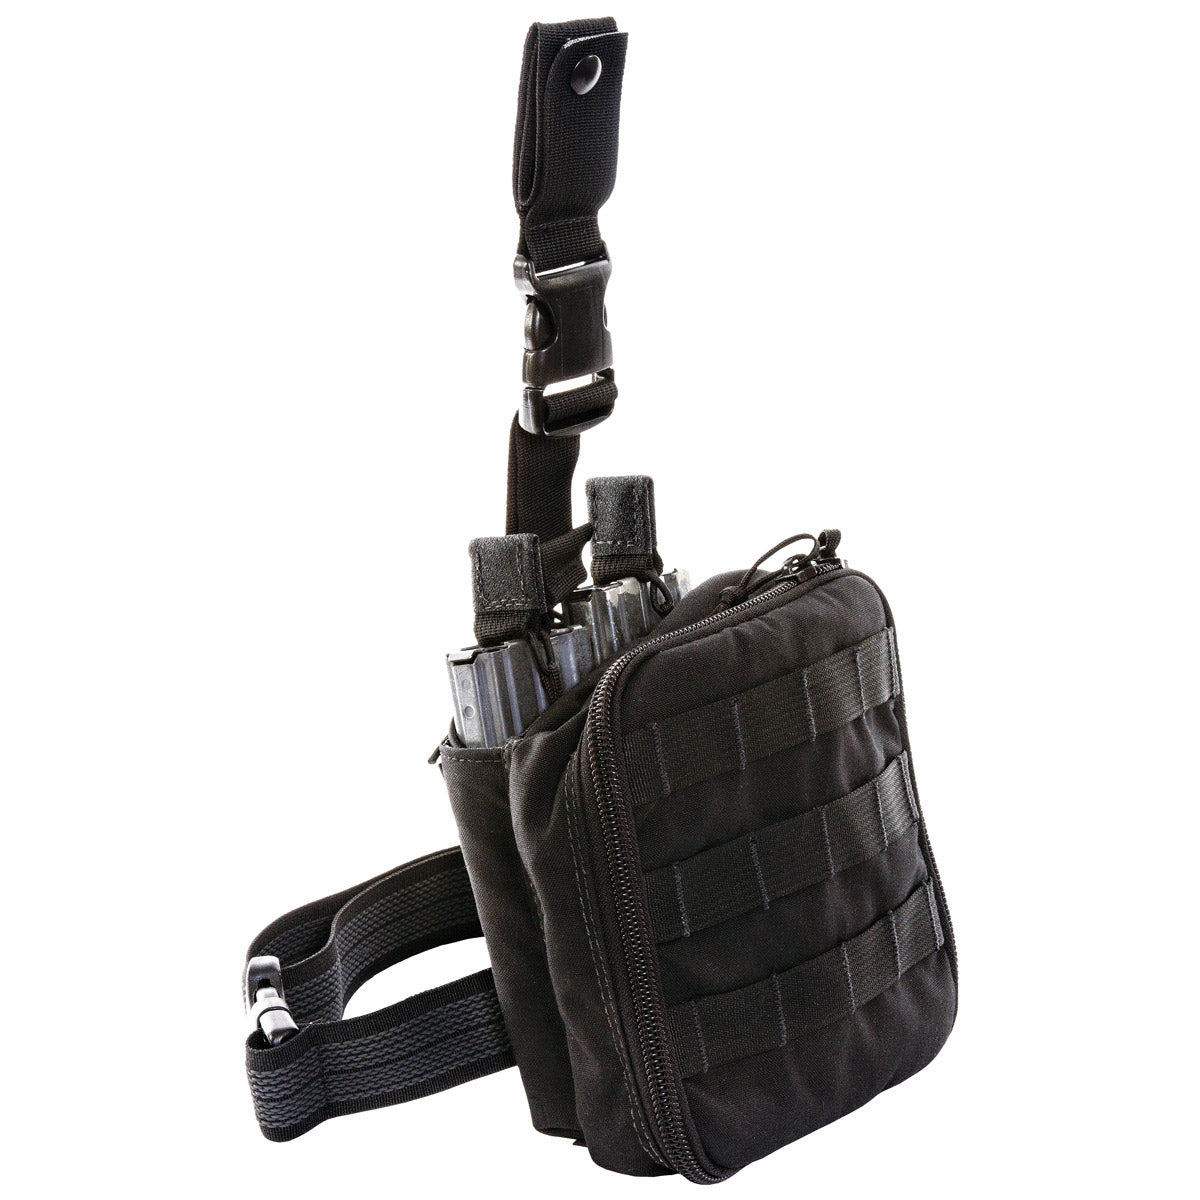 TacMed™ Patrol Rifle Response Kit